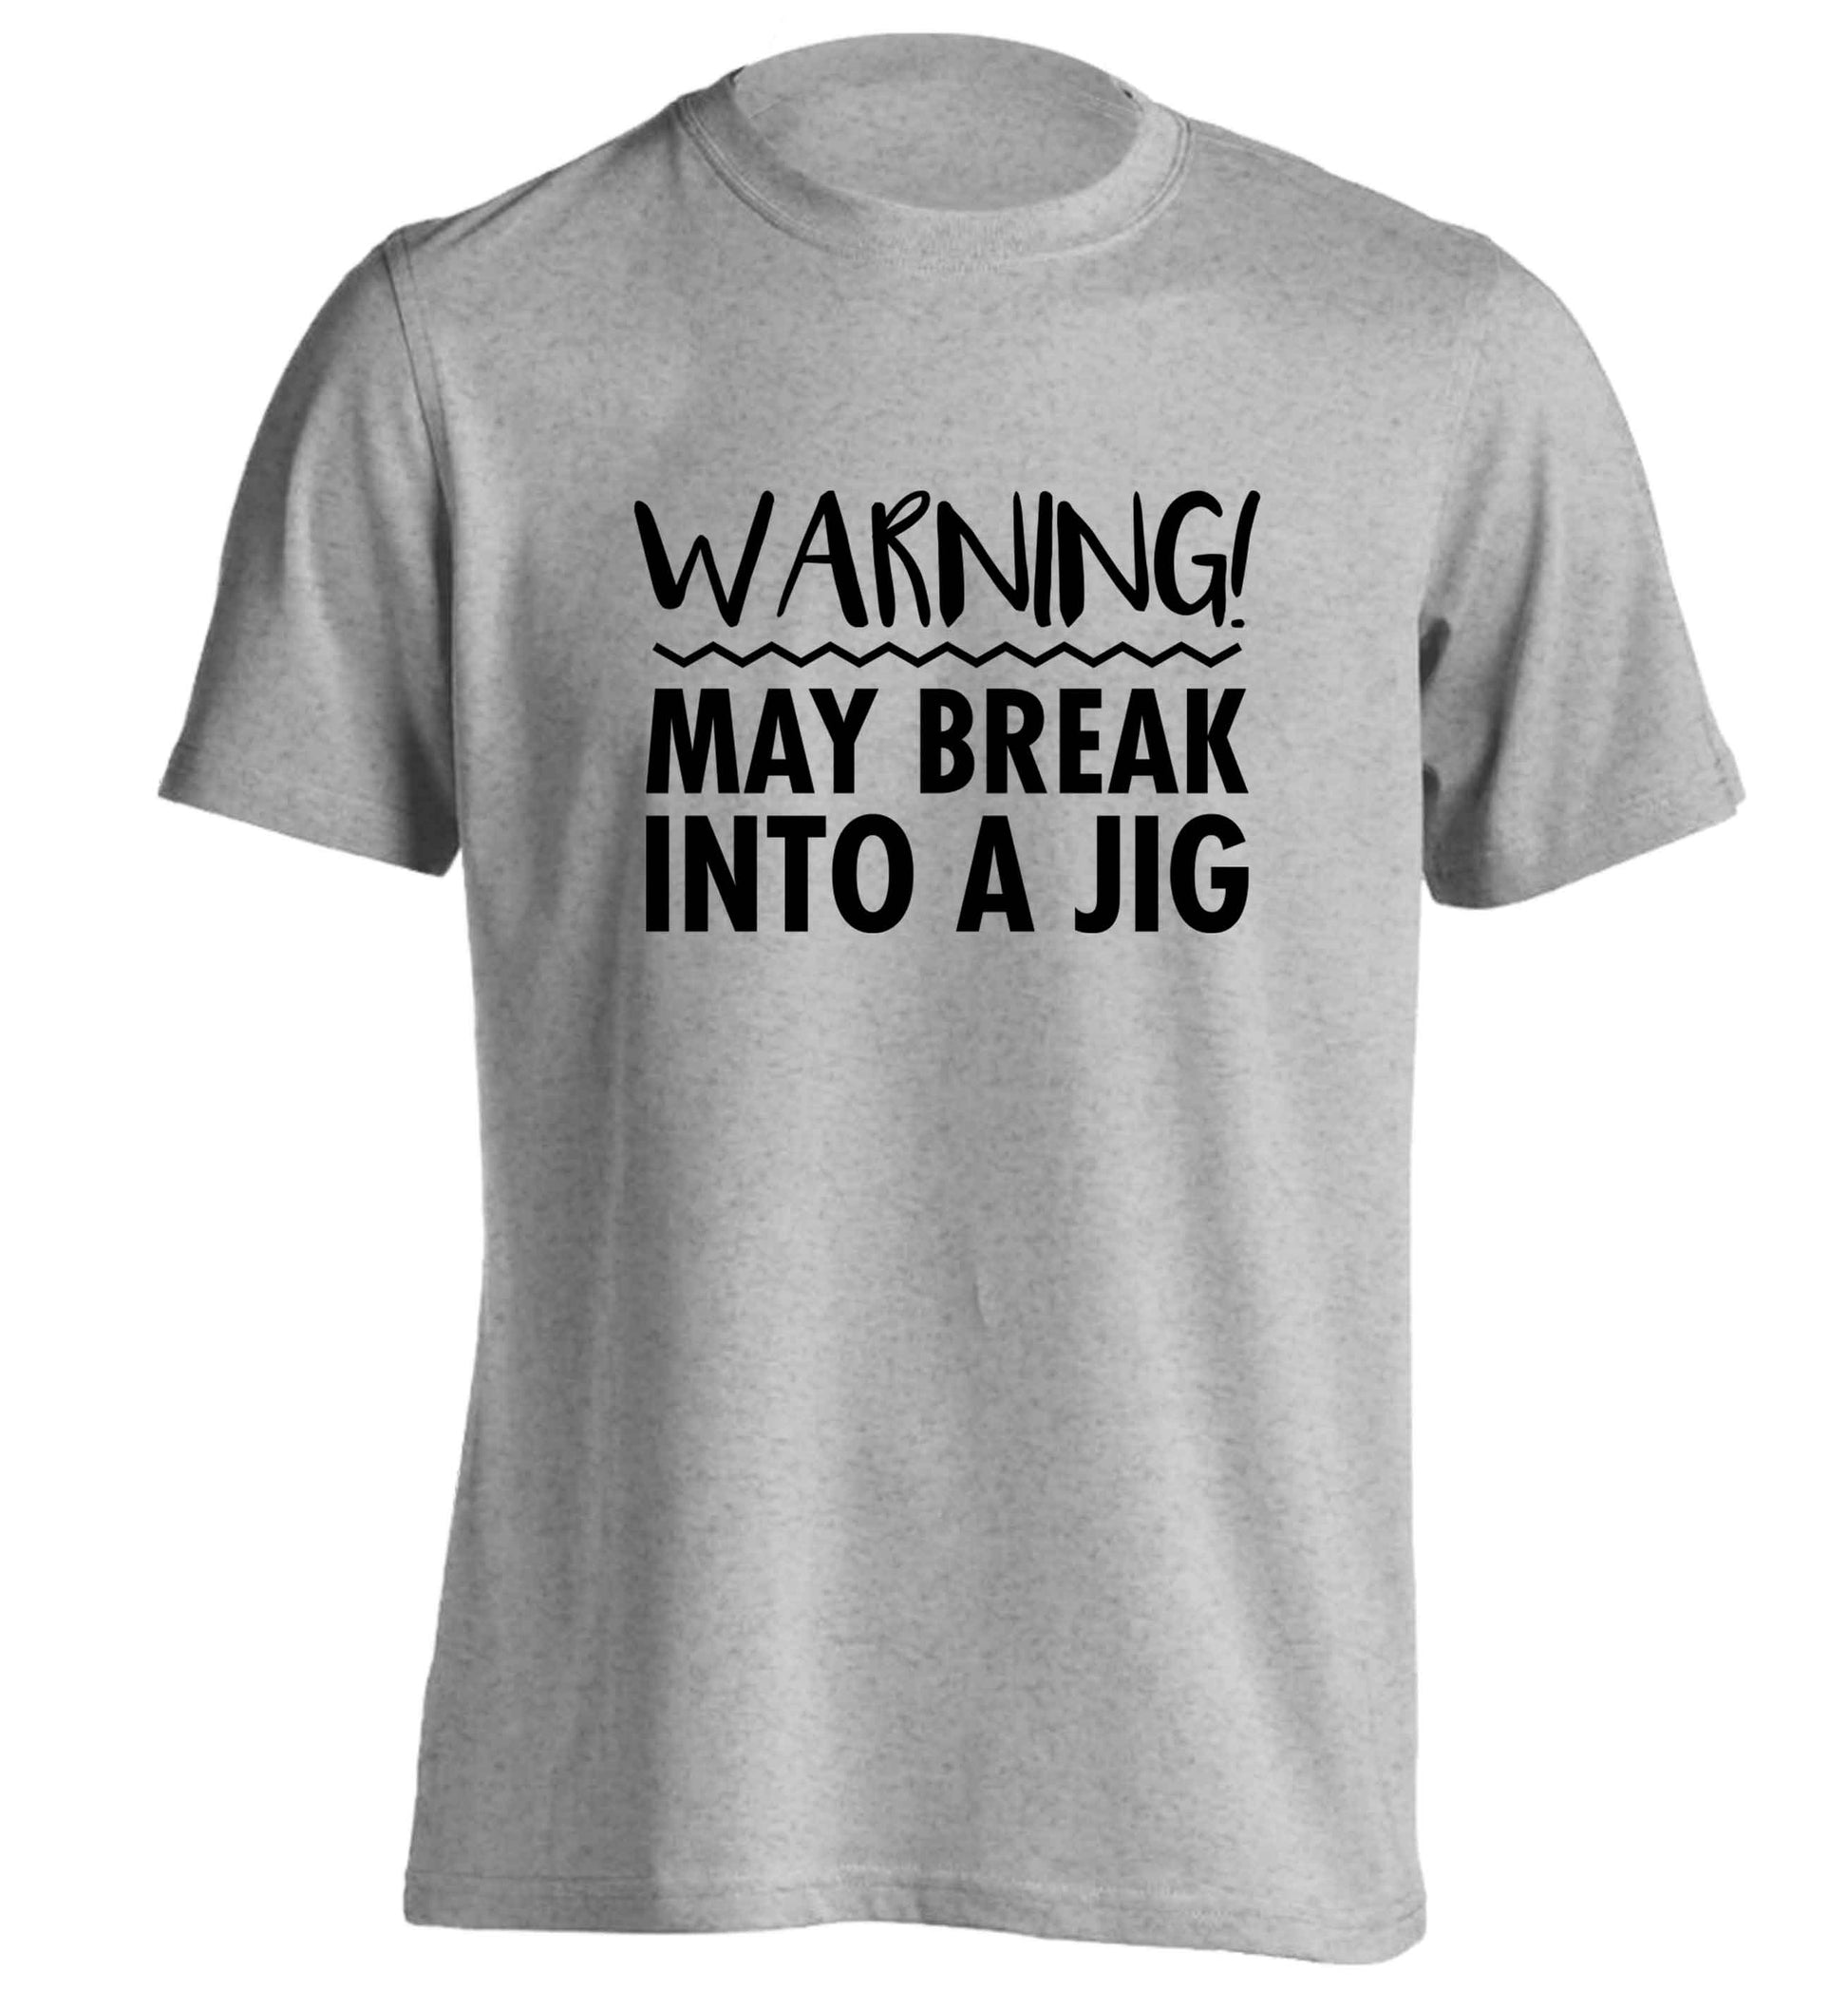 Warning may break into a jig adults unisex grey Tshirt 2XL